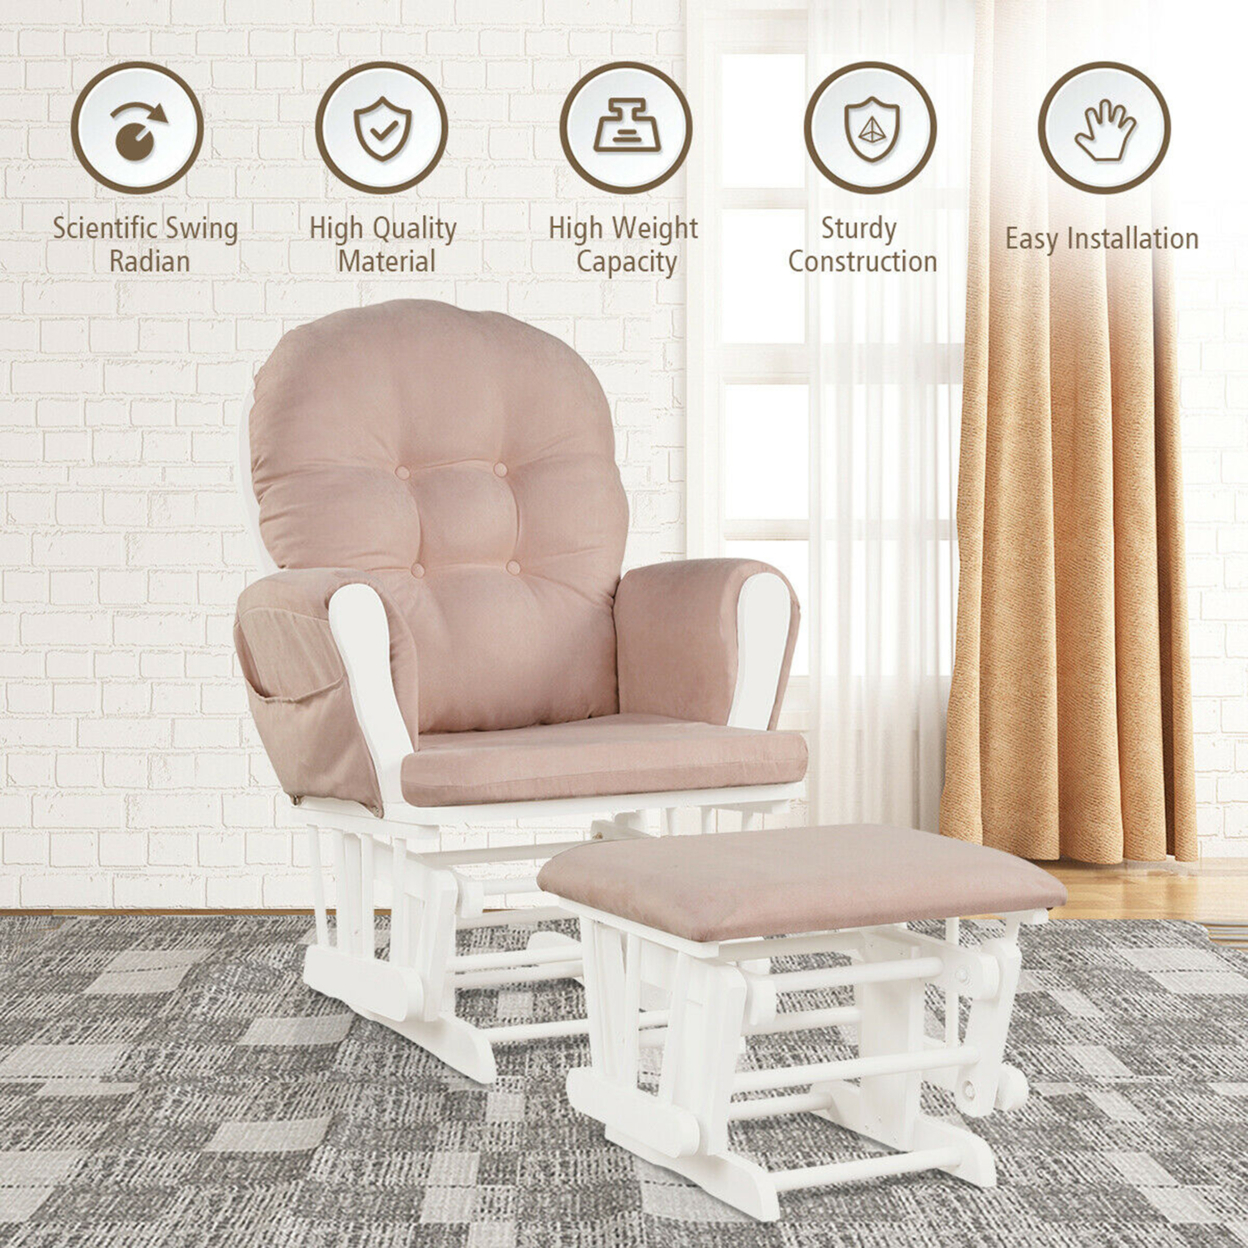 Baby Nursery Relax Rocker Rocking Chair Glider & Ottoman Set W/ Cushion - Pink